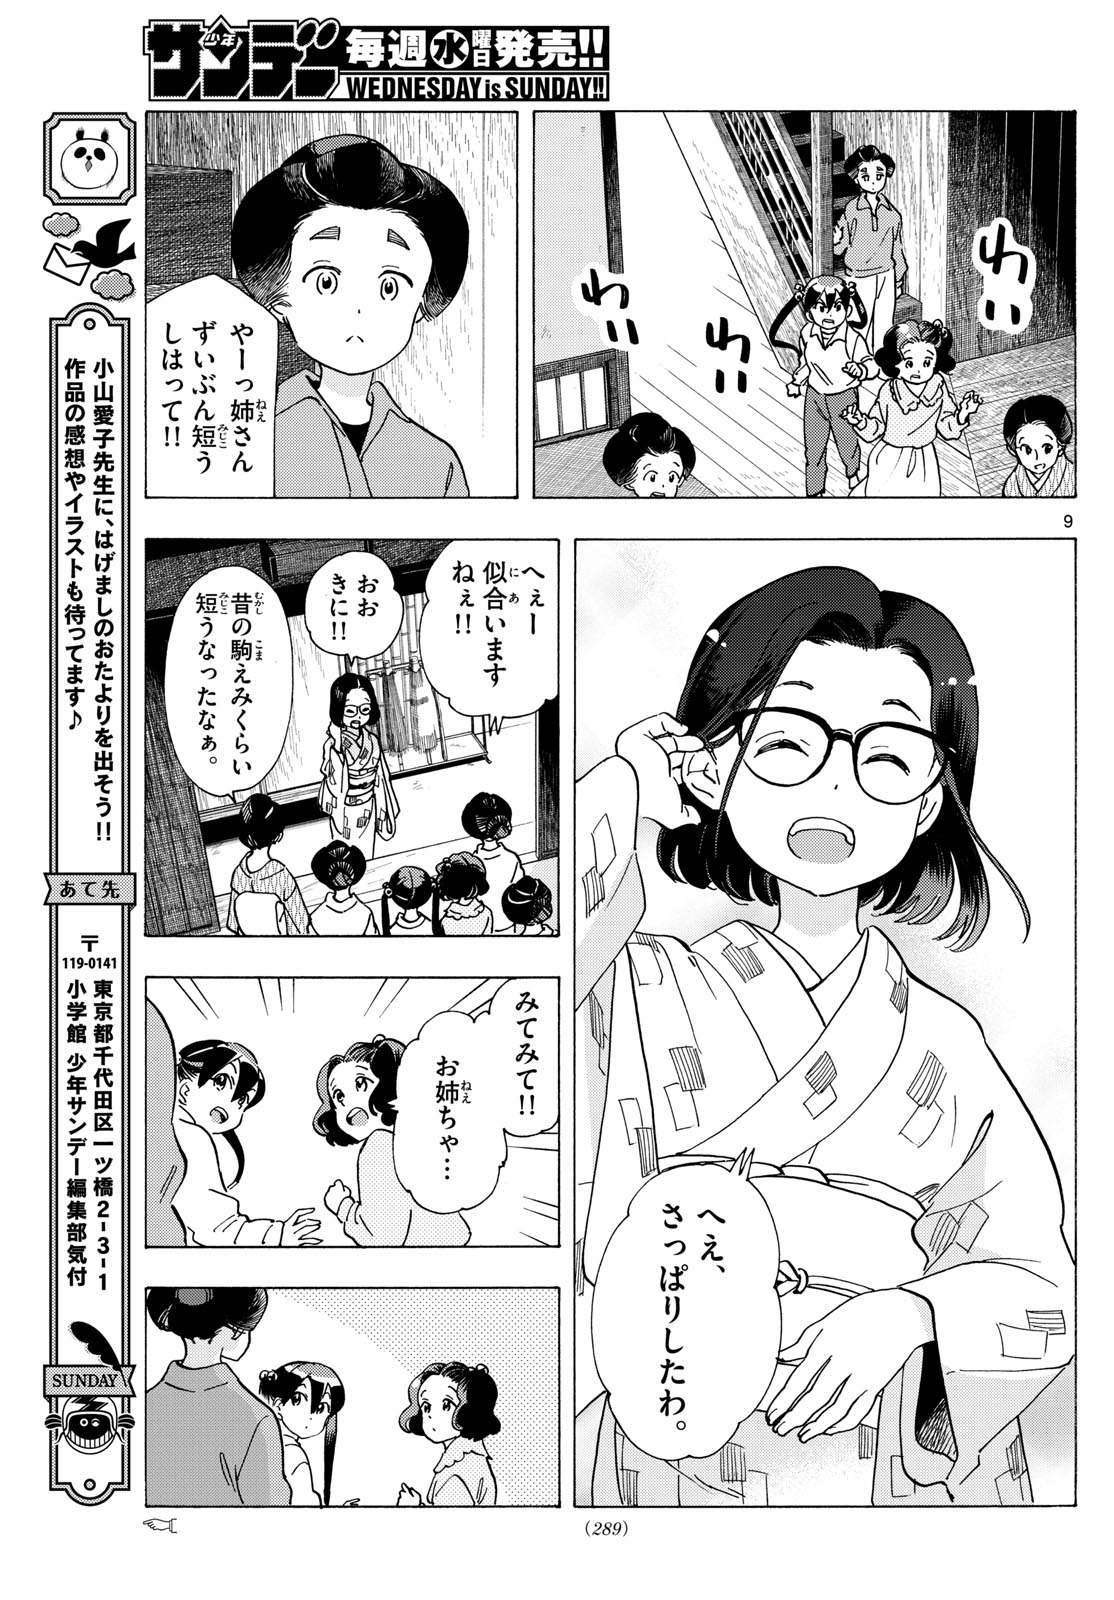 Maiko-san Chi no Makanai-san - Chapter 293 - Page 9